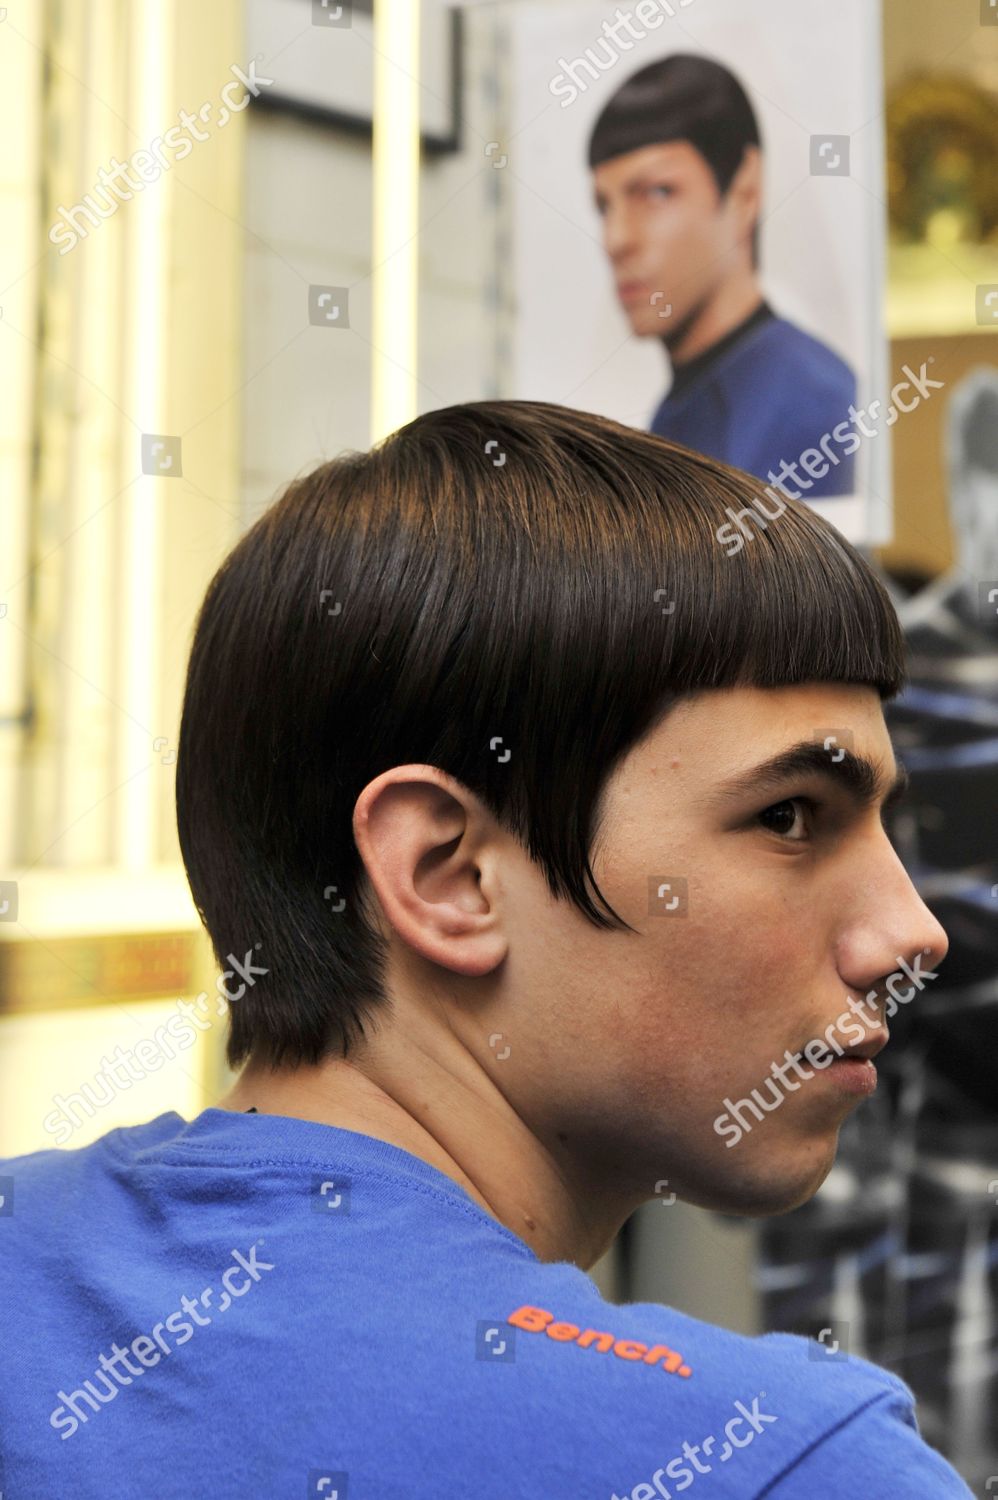 Man Star Trek Mr Spock Style Hair Editorial Stock Photo